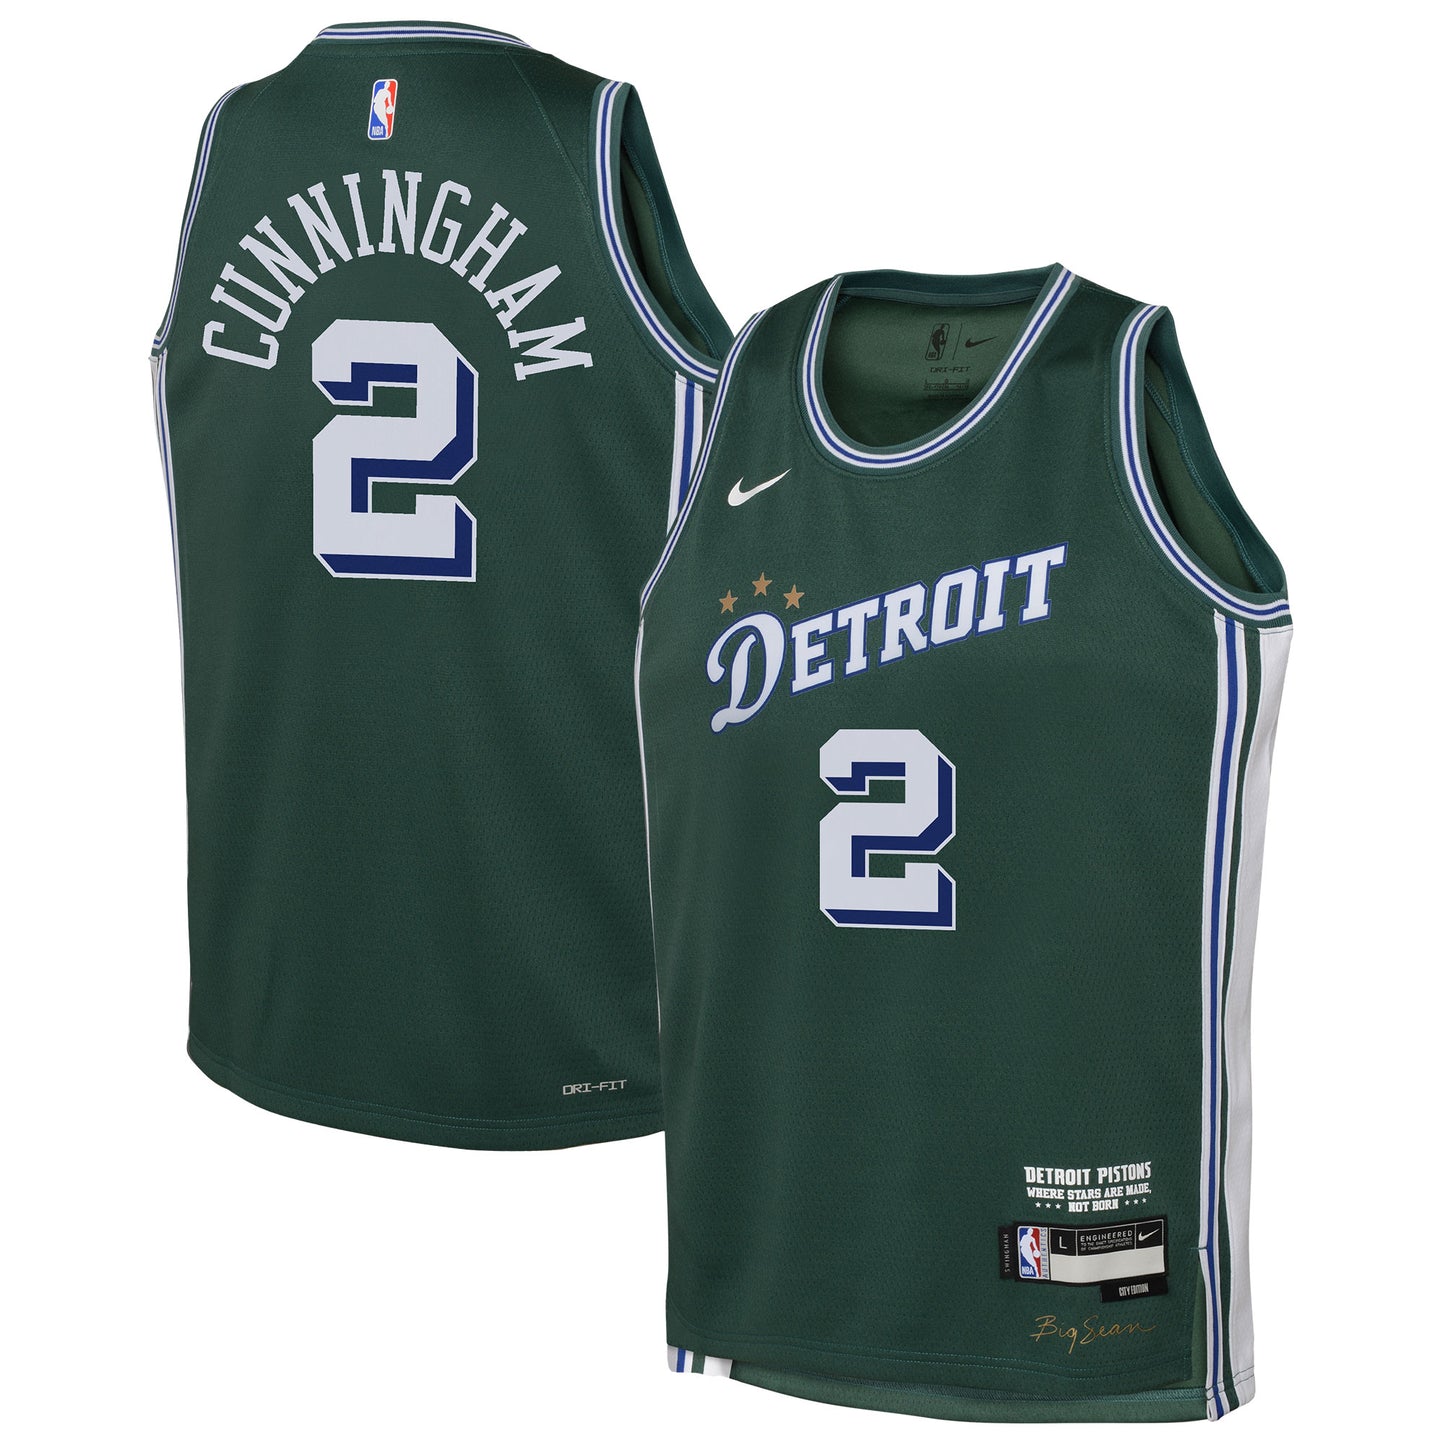 Cade Cunningham Detroit Pistons Nike Youth 2022/23 Swingman Jersey - City Edition - Green